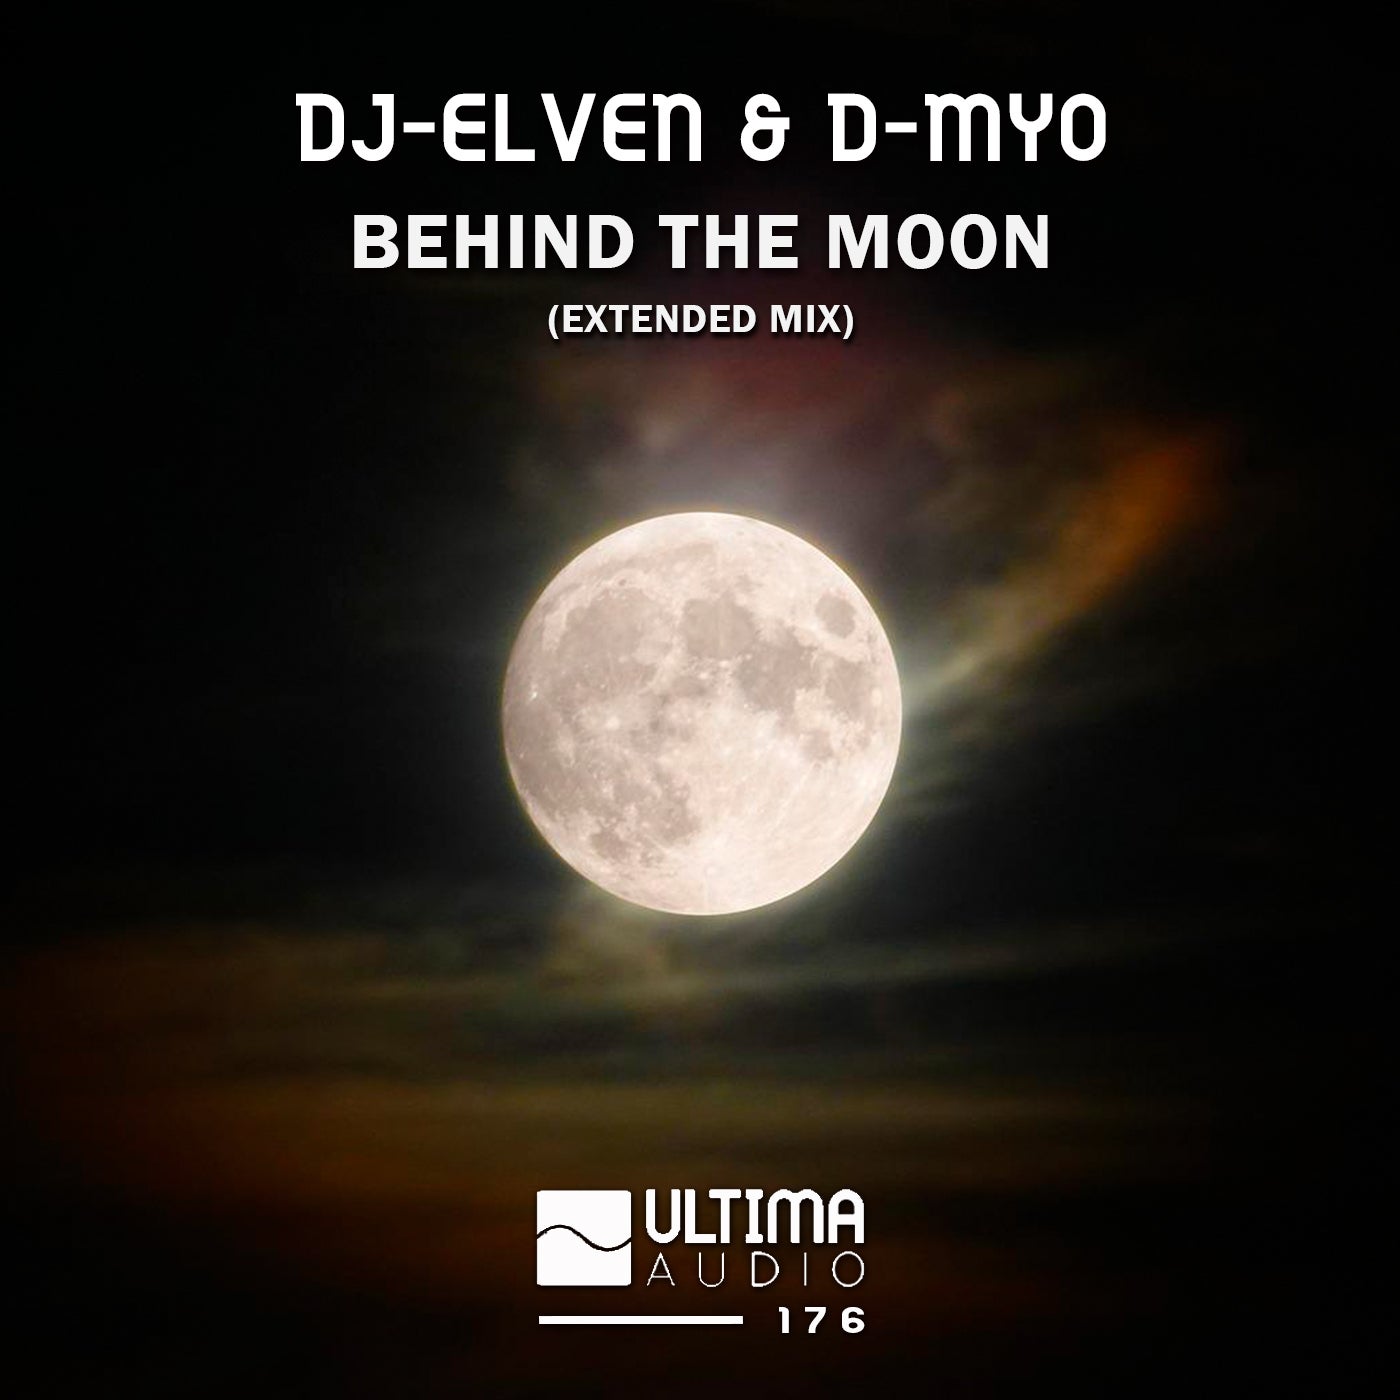 Inscription Луна. Lunar Radio обложки альбомов. DJ Elven d-MYO Erase my Sadness Original Mix. Weepee - Lunar (Extended Mix). Man on moon extended mix